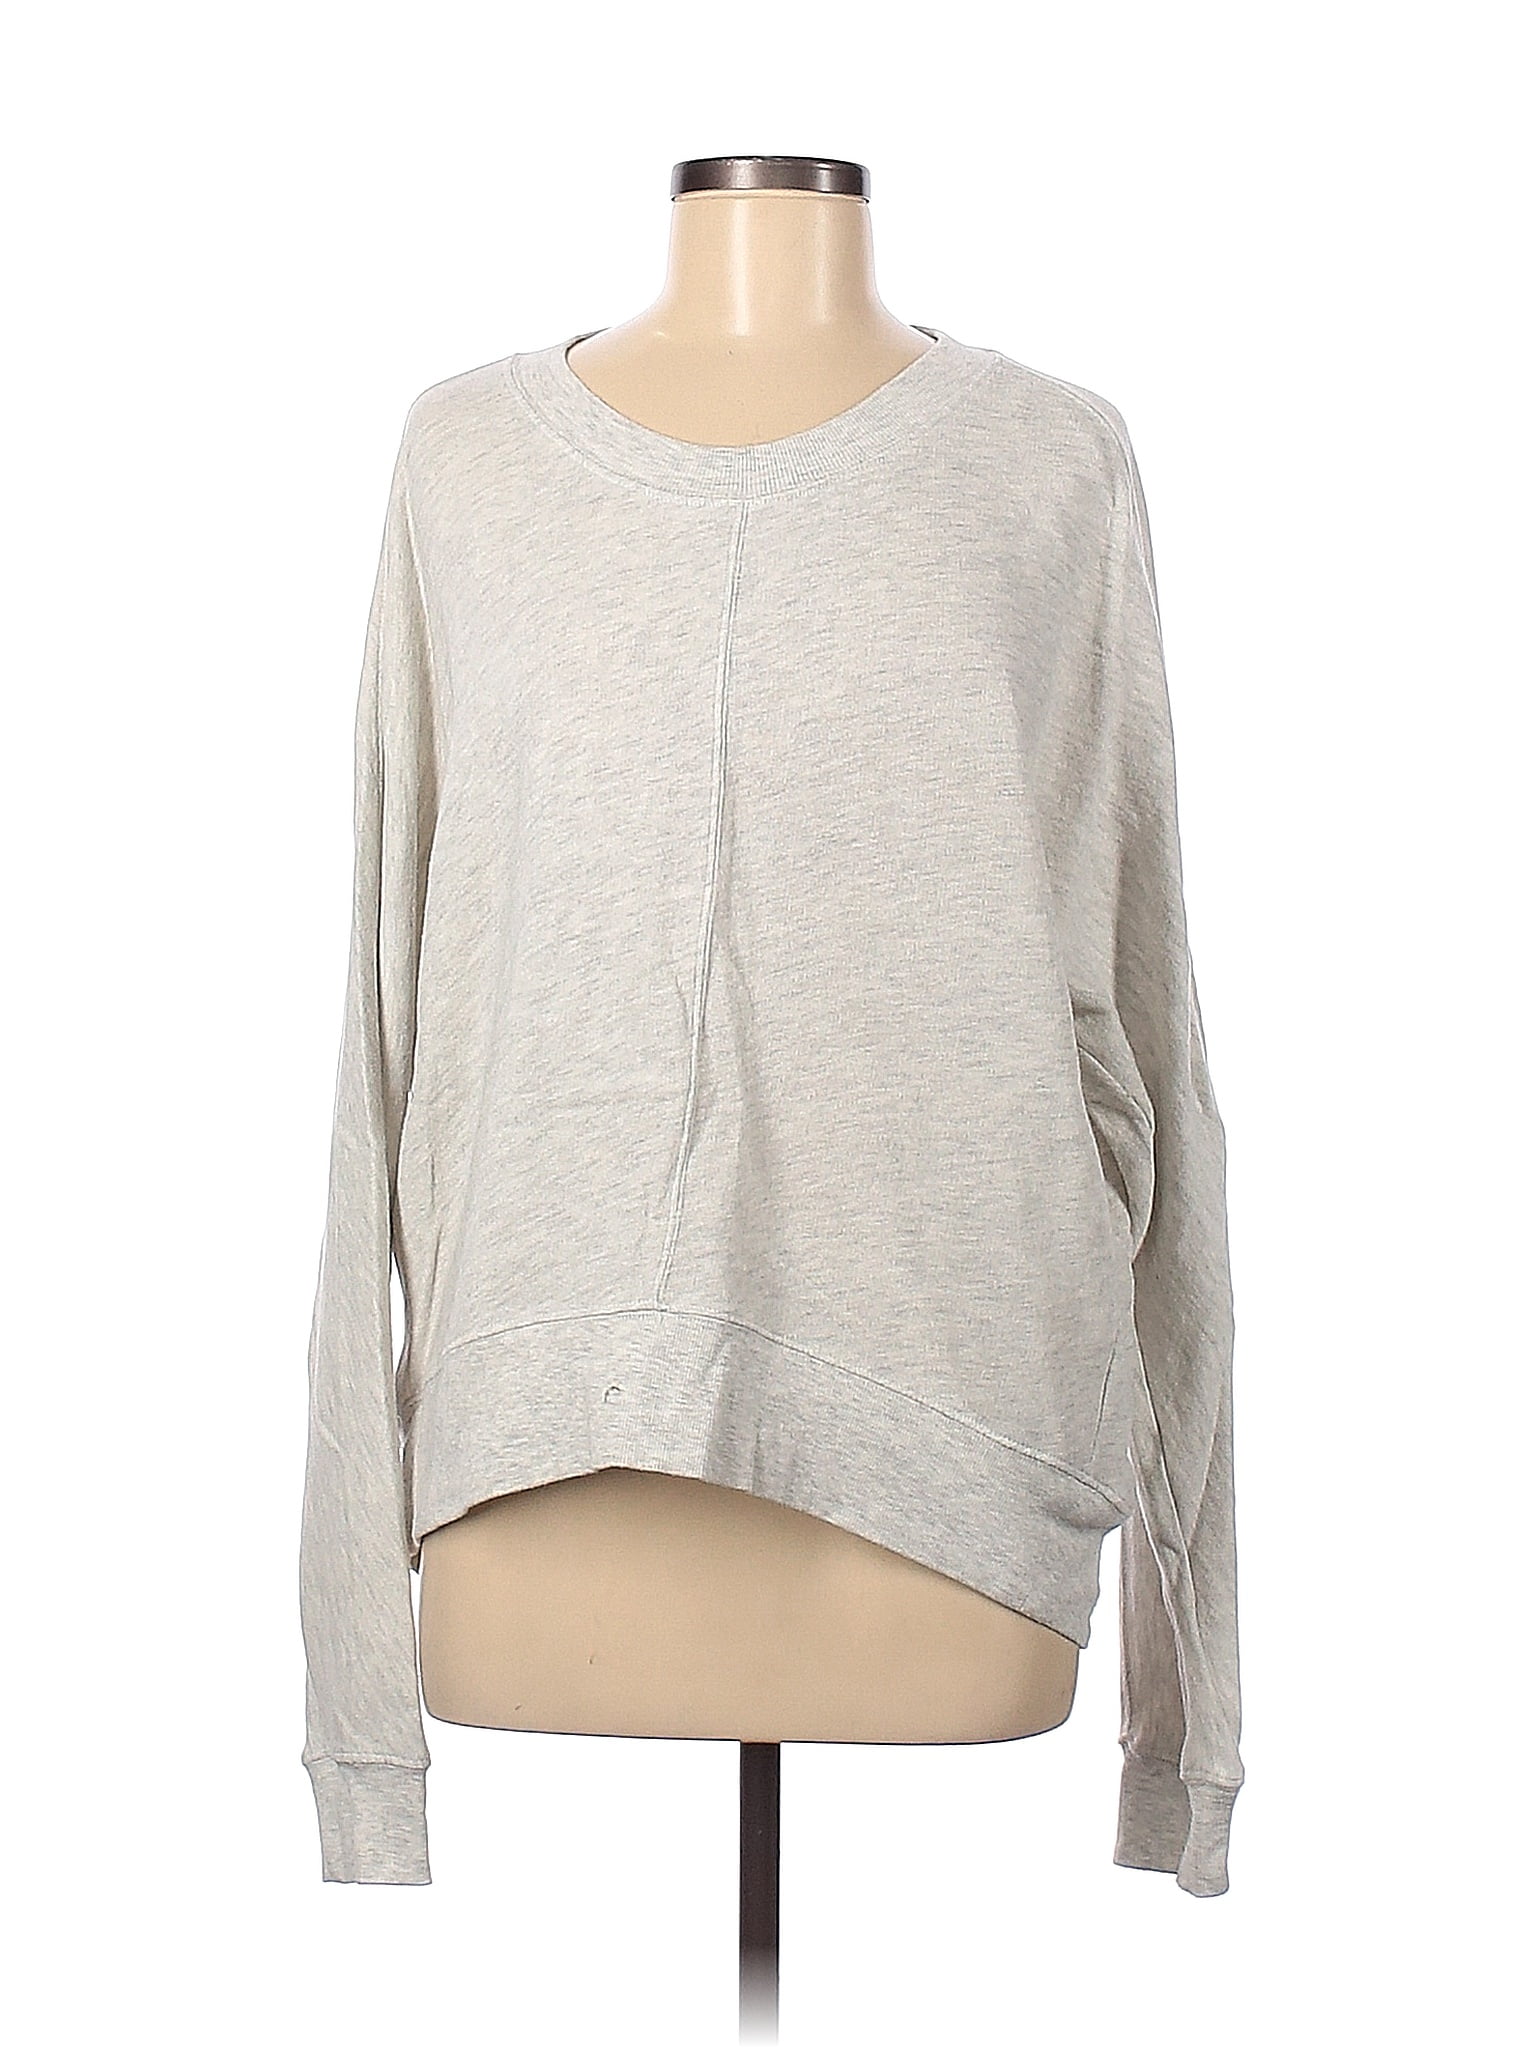 Zella Gray Sweatshirt Size M - 73% off | thredUP